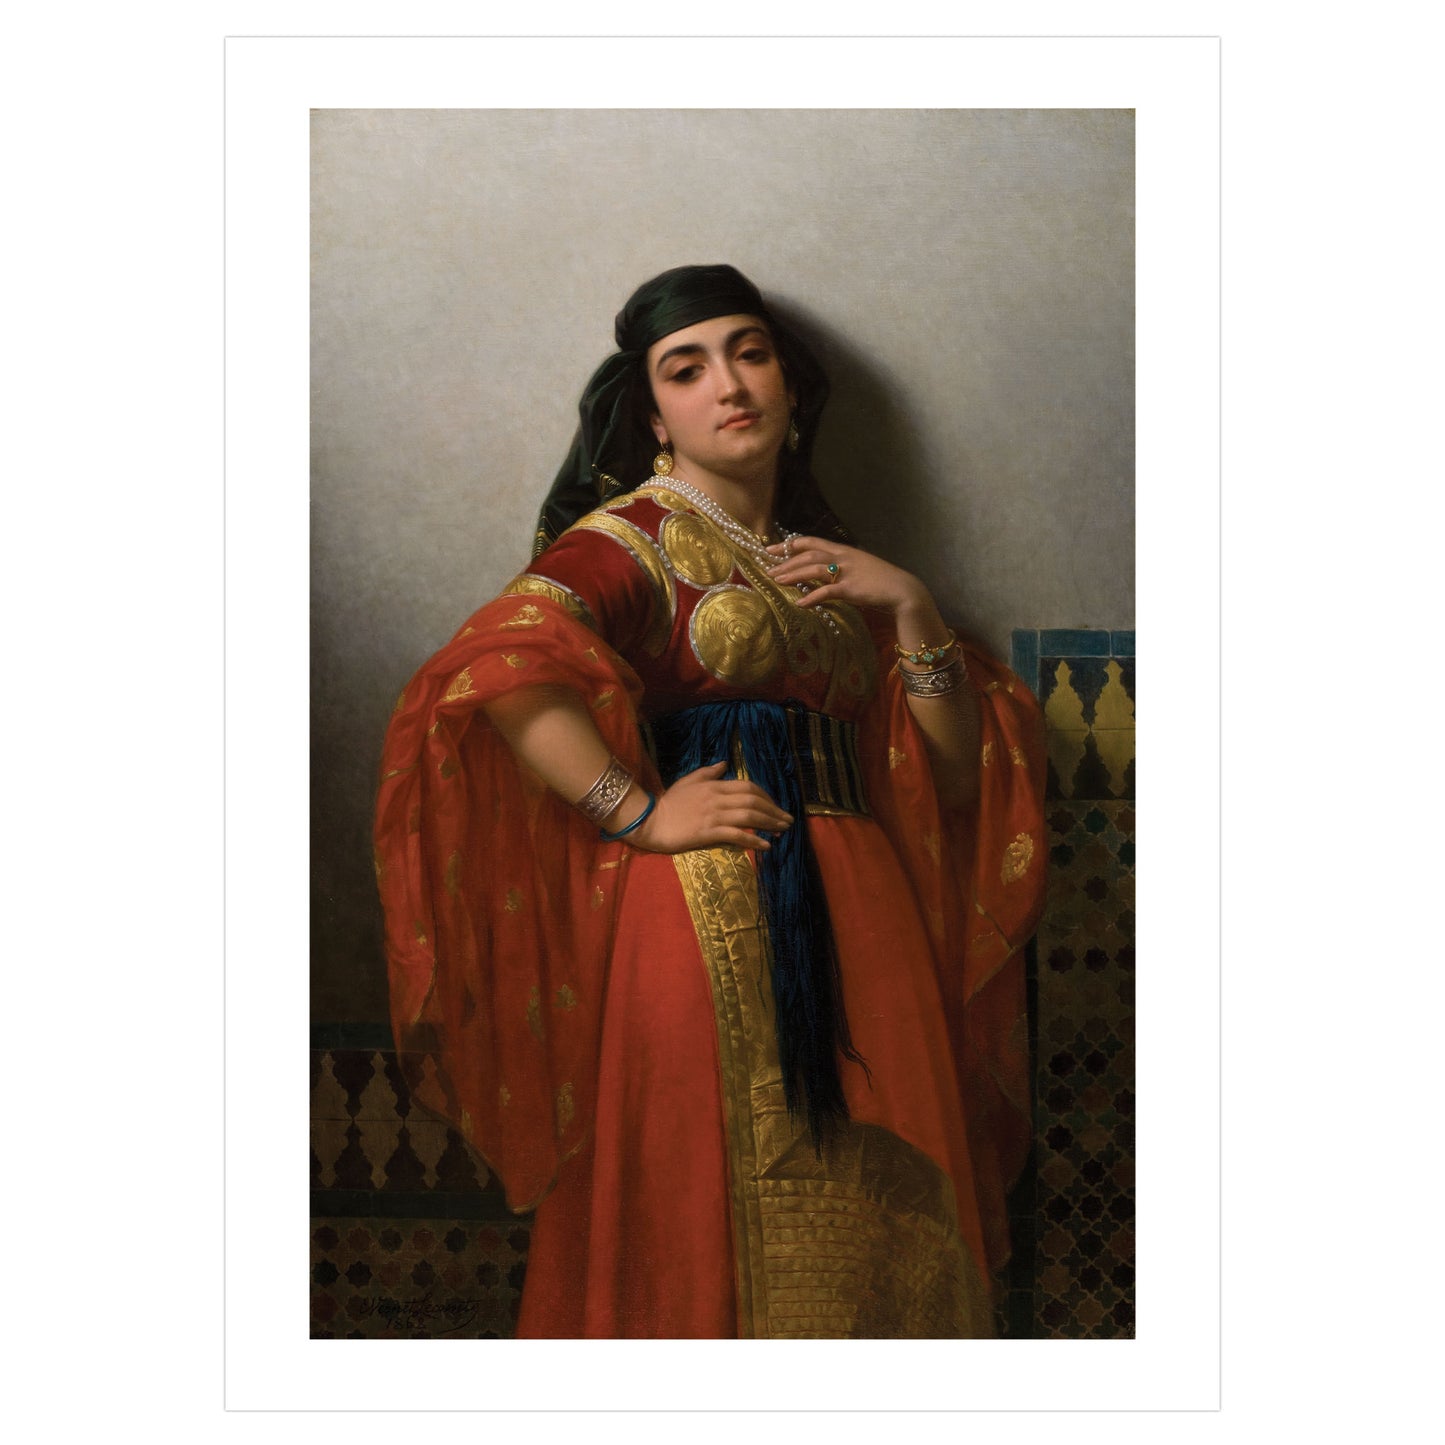 Post Card: "A Jewess of Morocco: Costume de Fête," by Emile Lecomte-Vernet